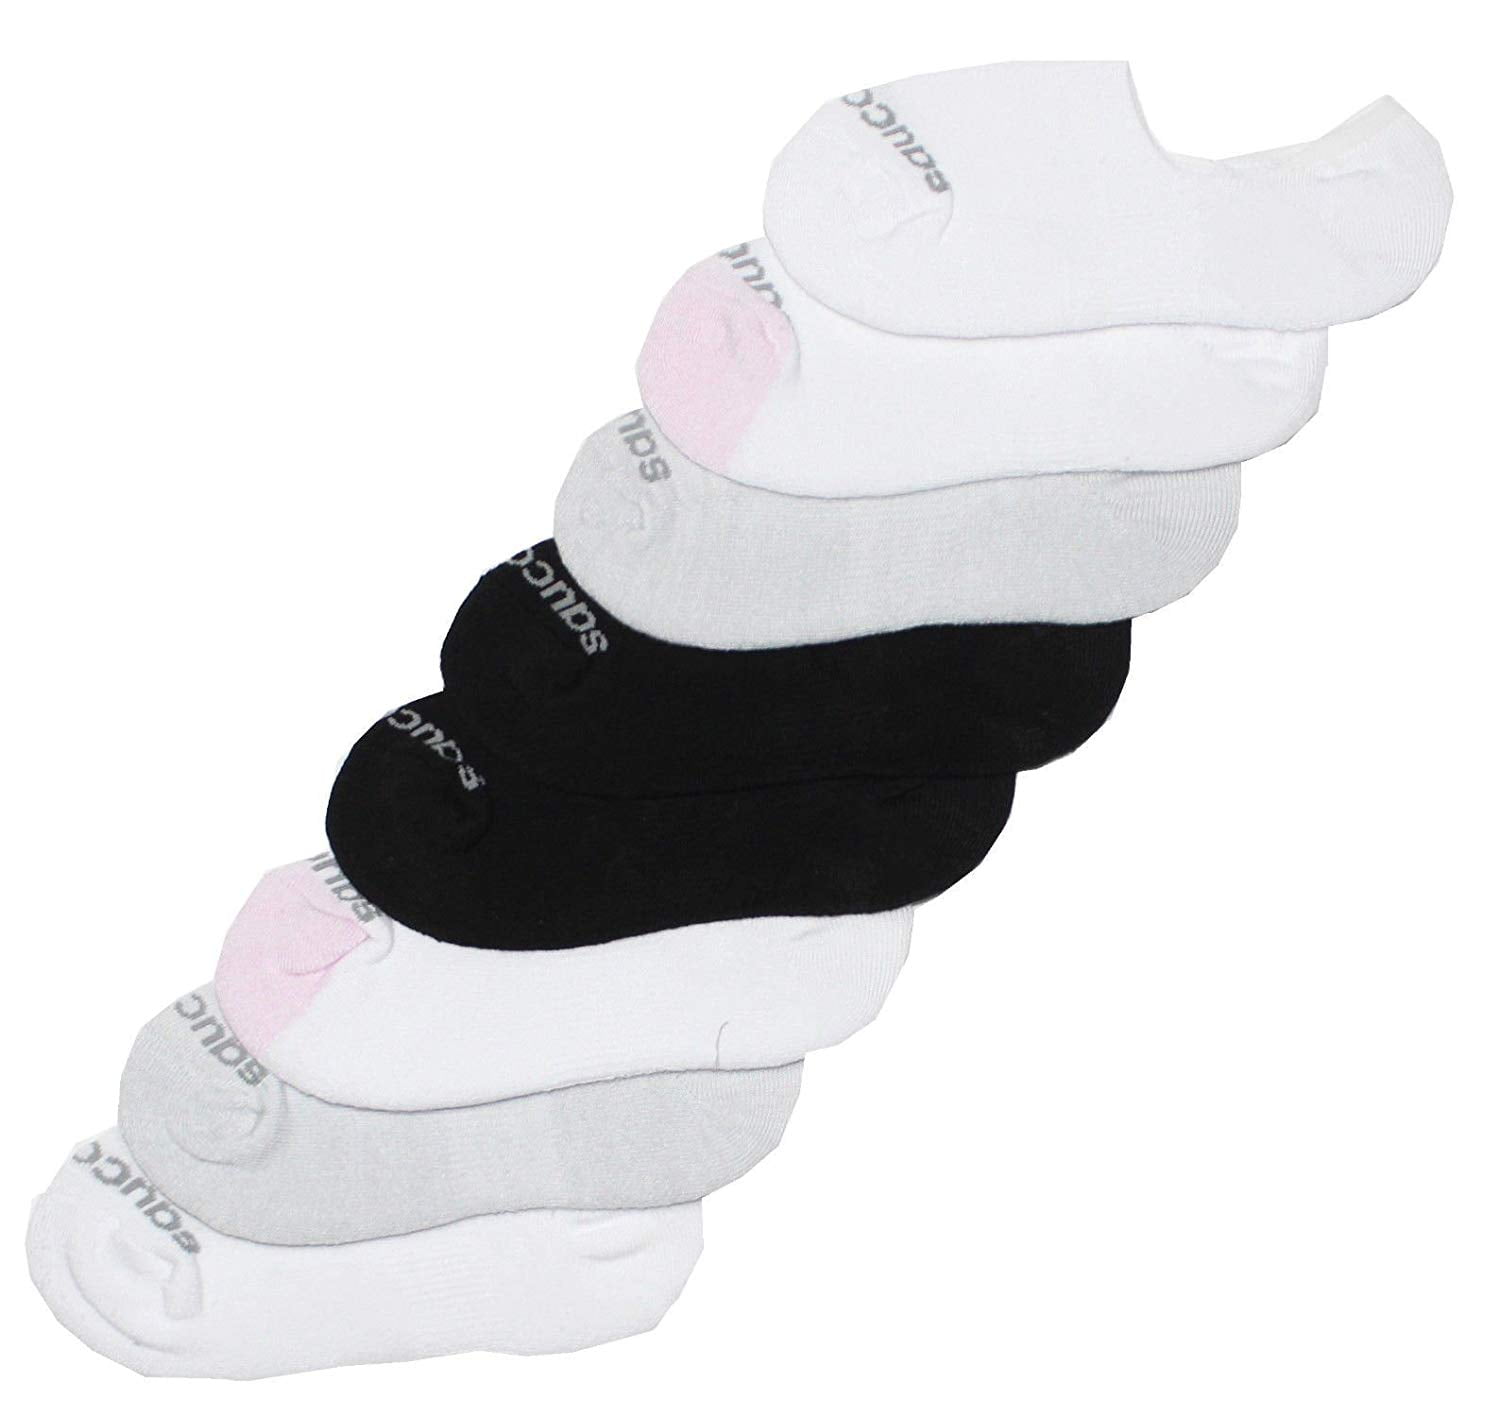 saucony sock